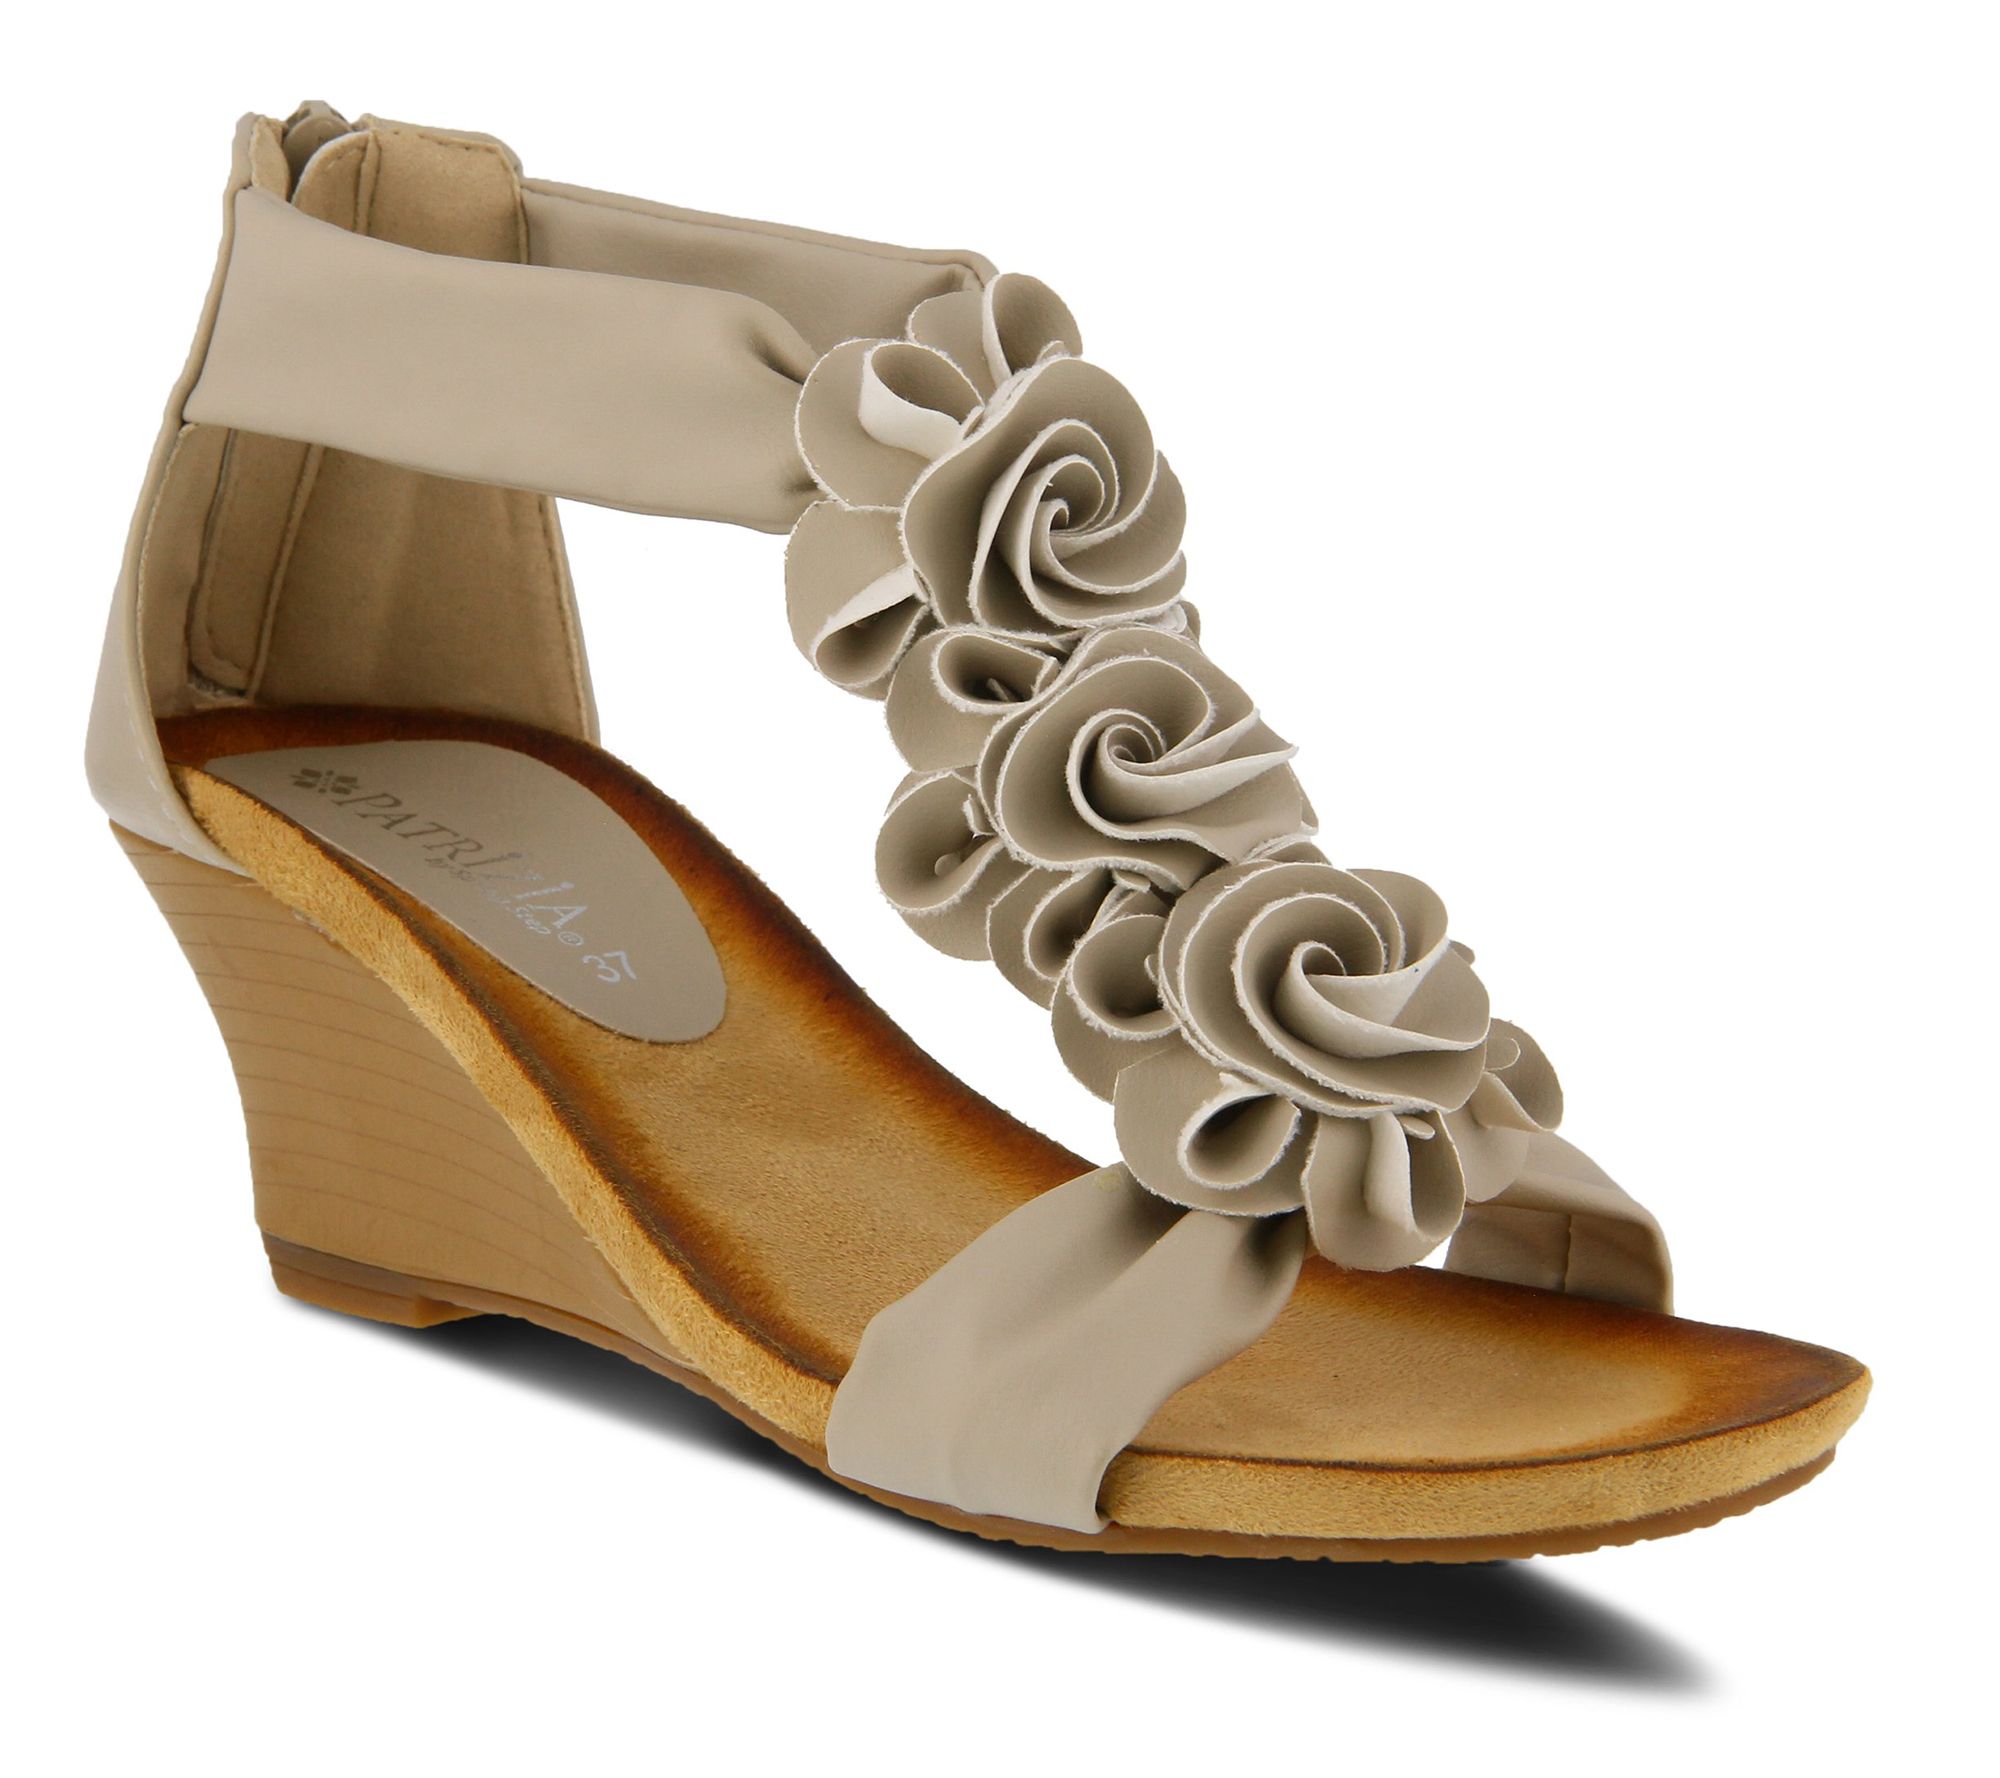 Spring Step Suede Floral Wedge Sandals - Laylani 